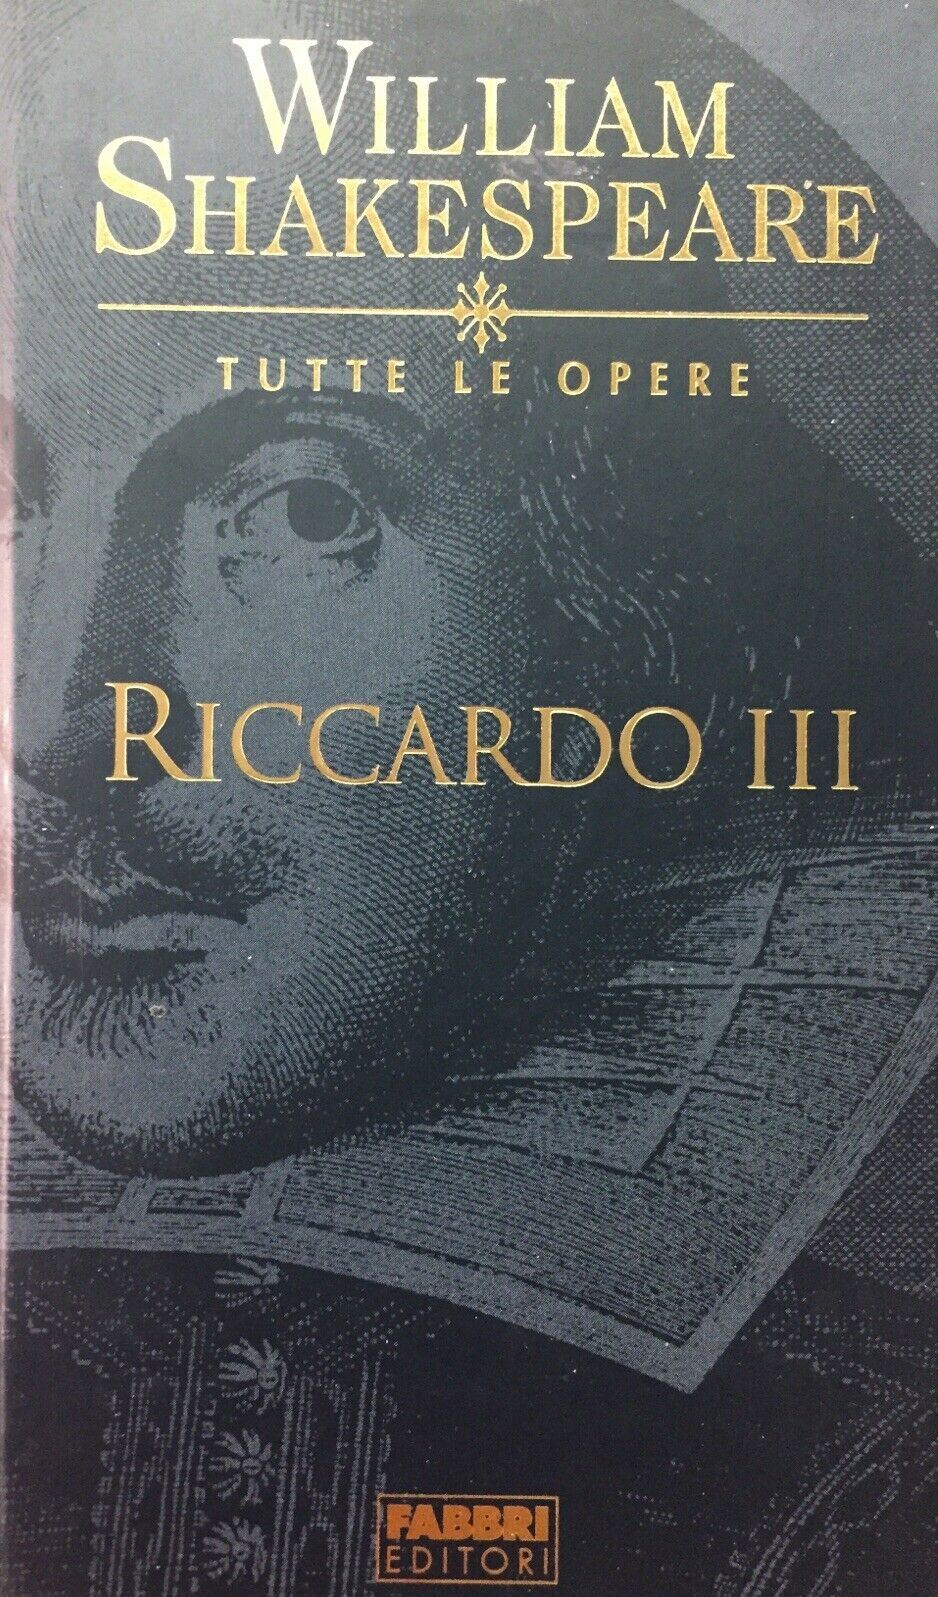 RICCARDO III WILLIAM SHAKESPEARE TUTTE LE OPERE FABBRI EDITORI E658